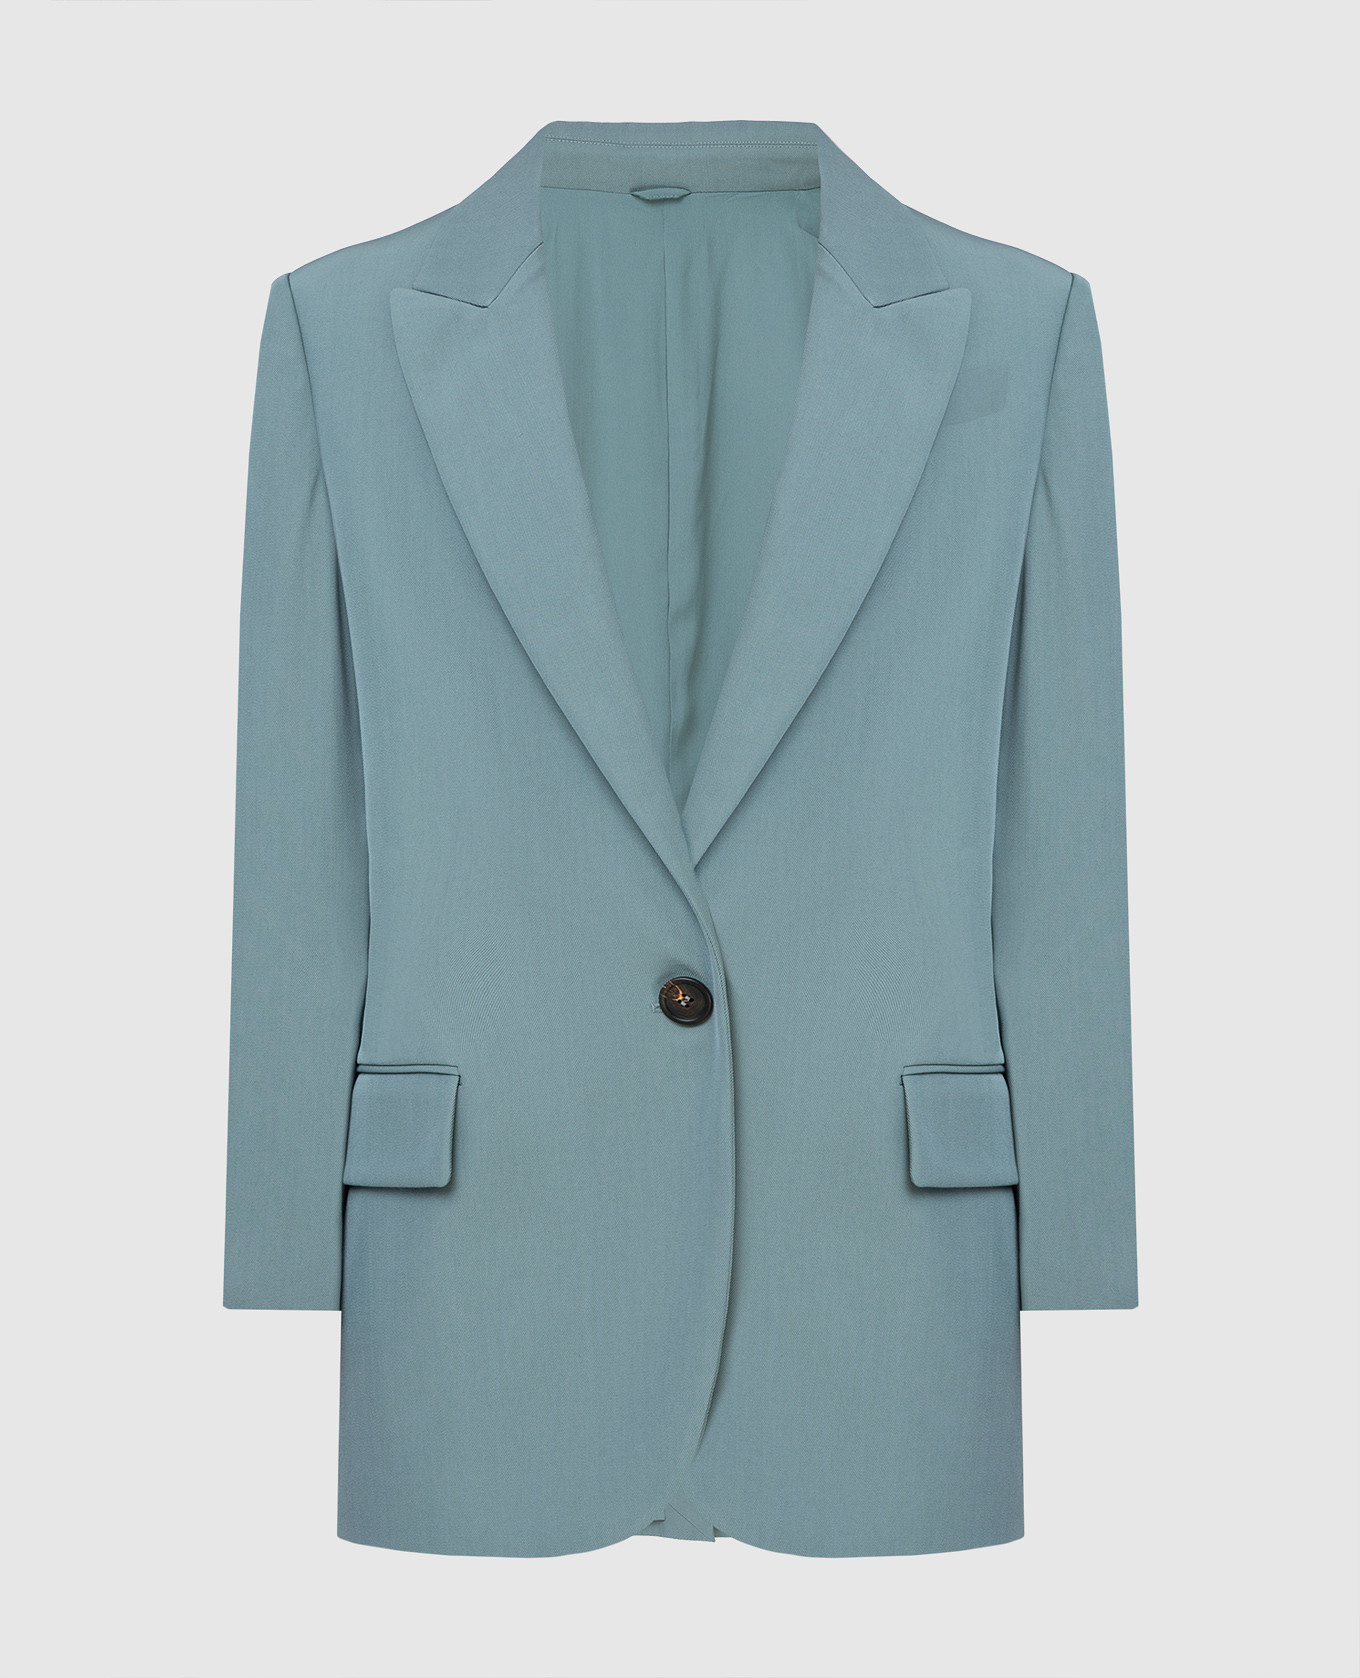 Turquoise wool jacket